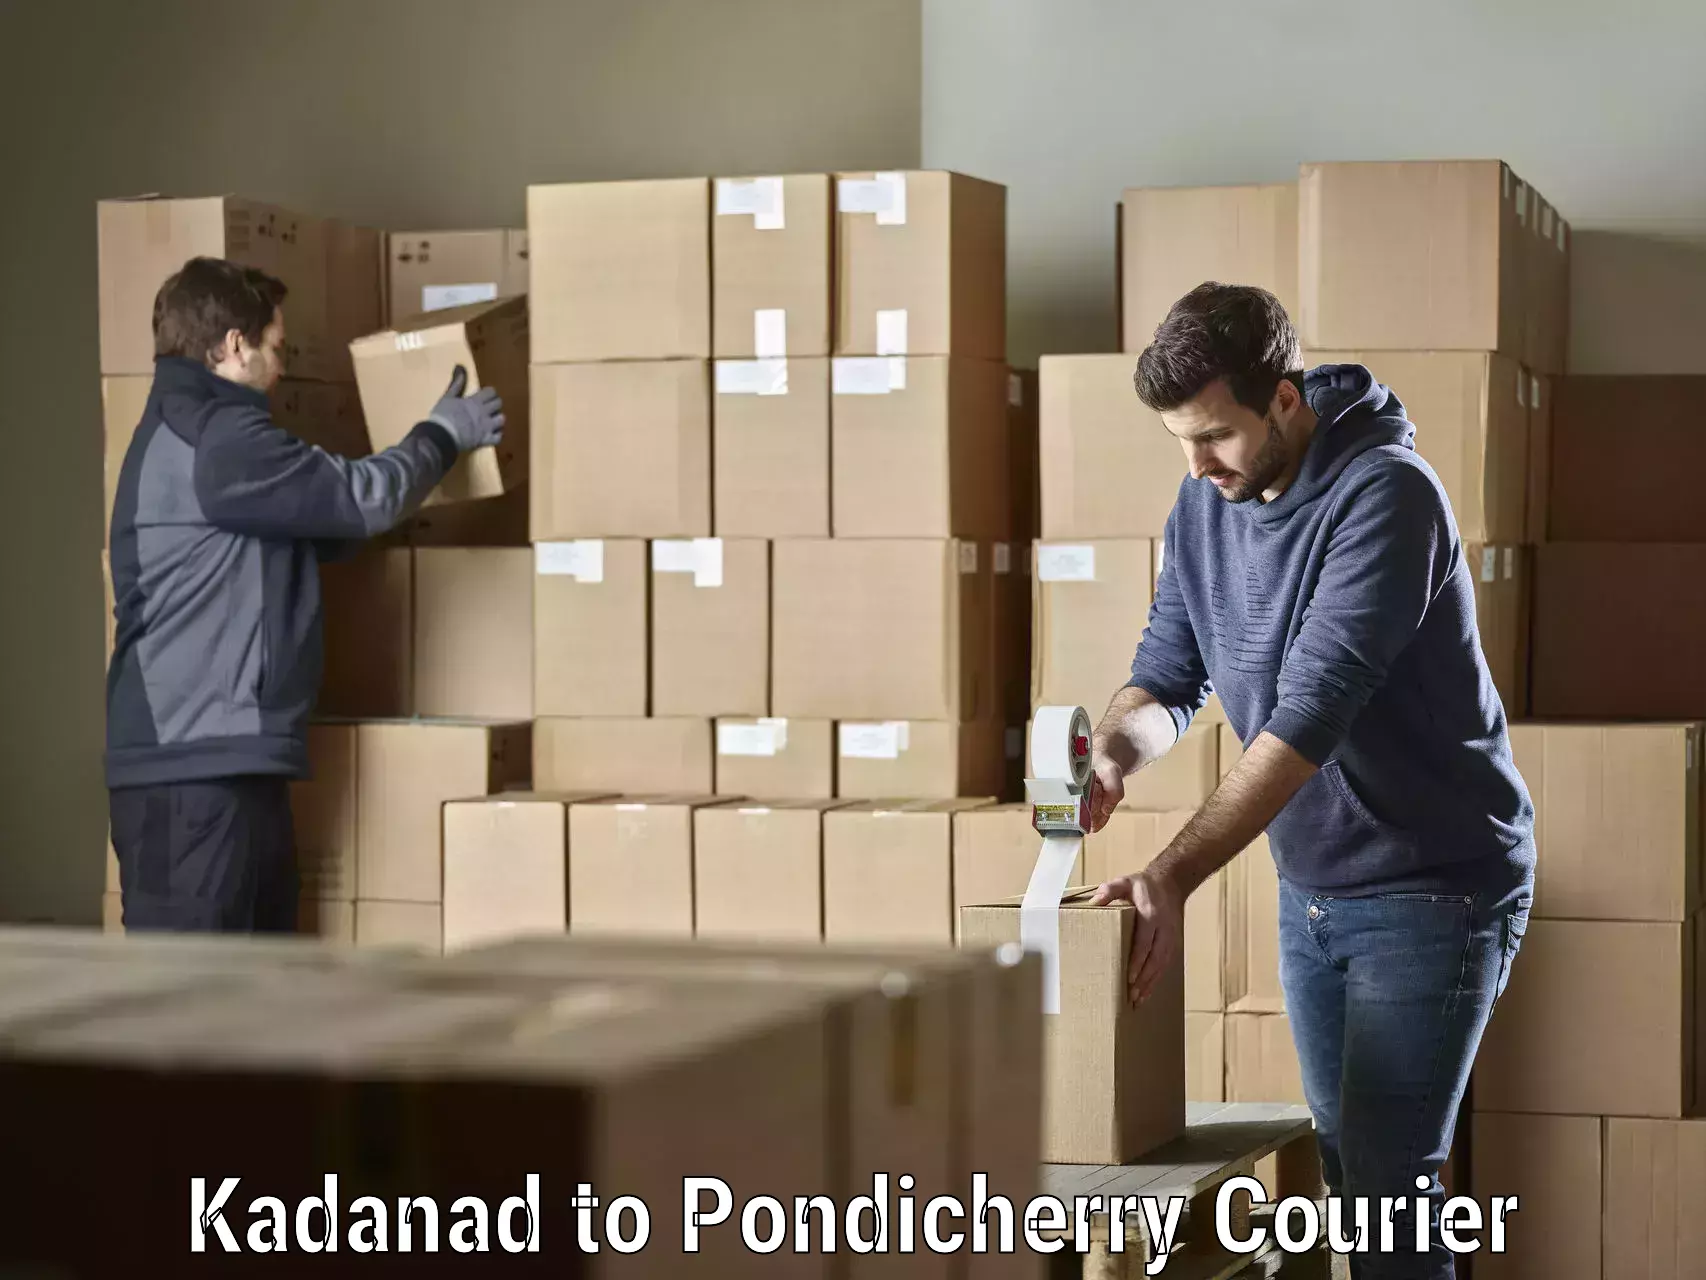 Courier service innovation Kadanad to Pondicherry